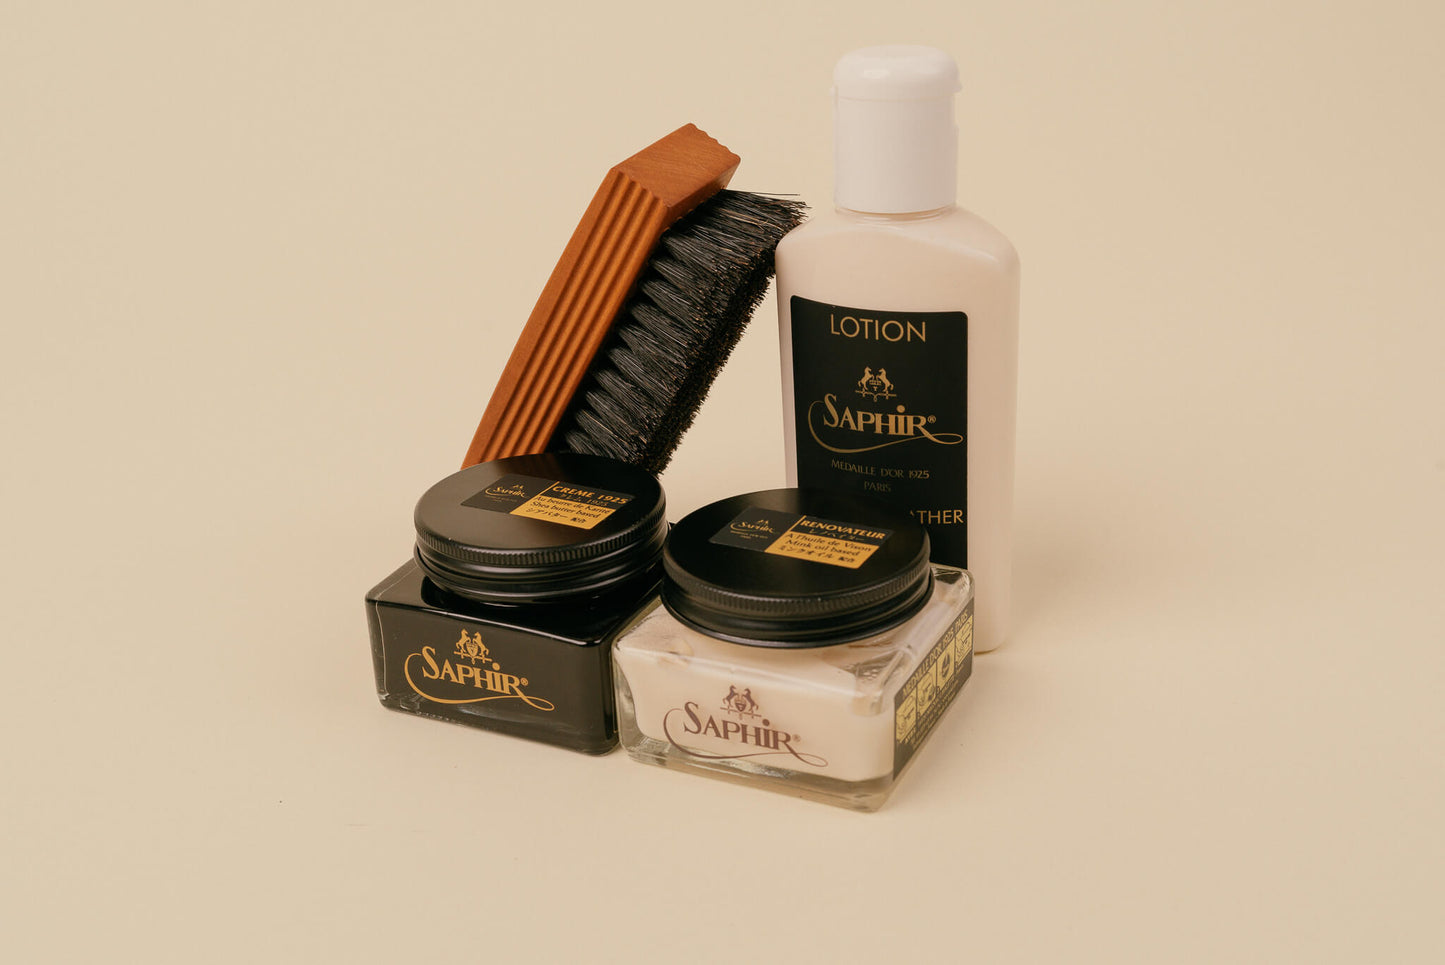 Brillaré Minimalist Shoe Care Kit photo. Contains Saphir Medaille d'or Horse hair polish brush, leather lotion, pommadier 1925 cream polish, and renovateur renovating cream polish